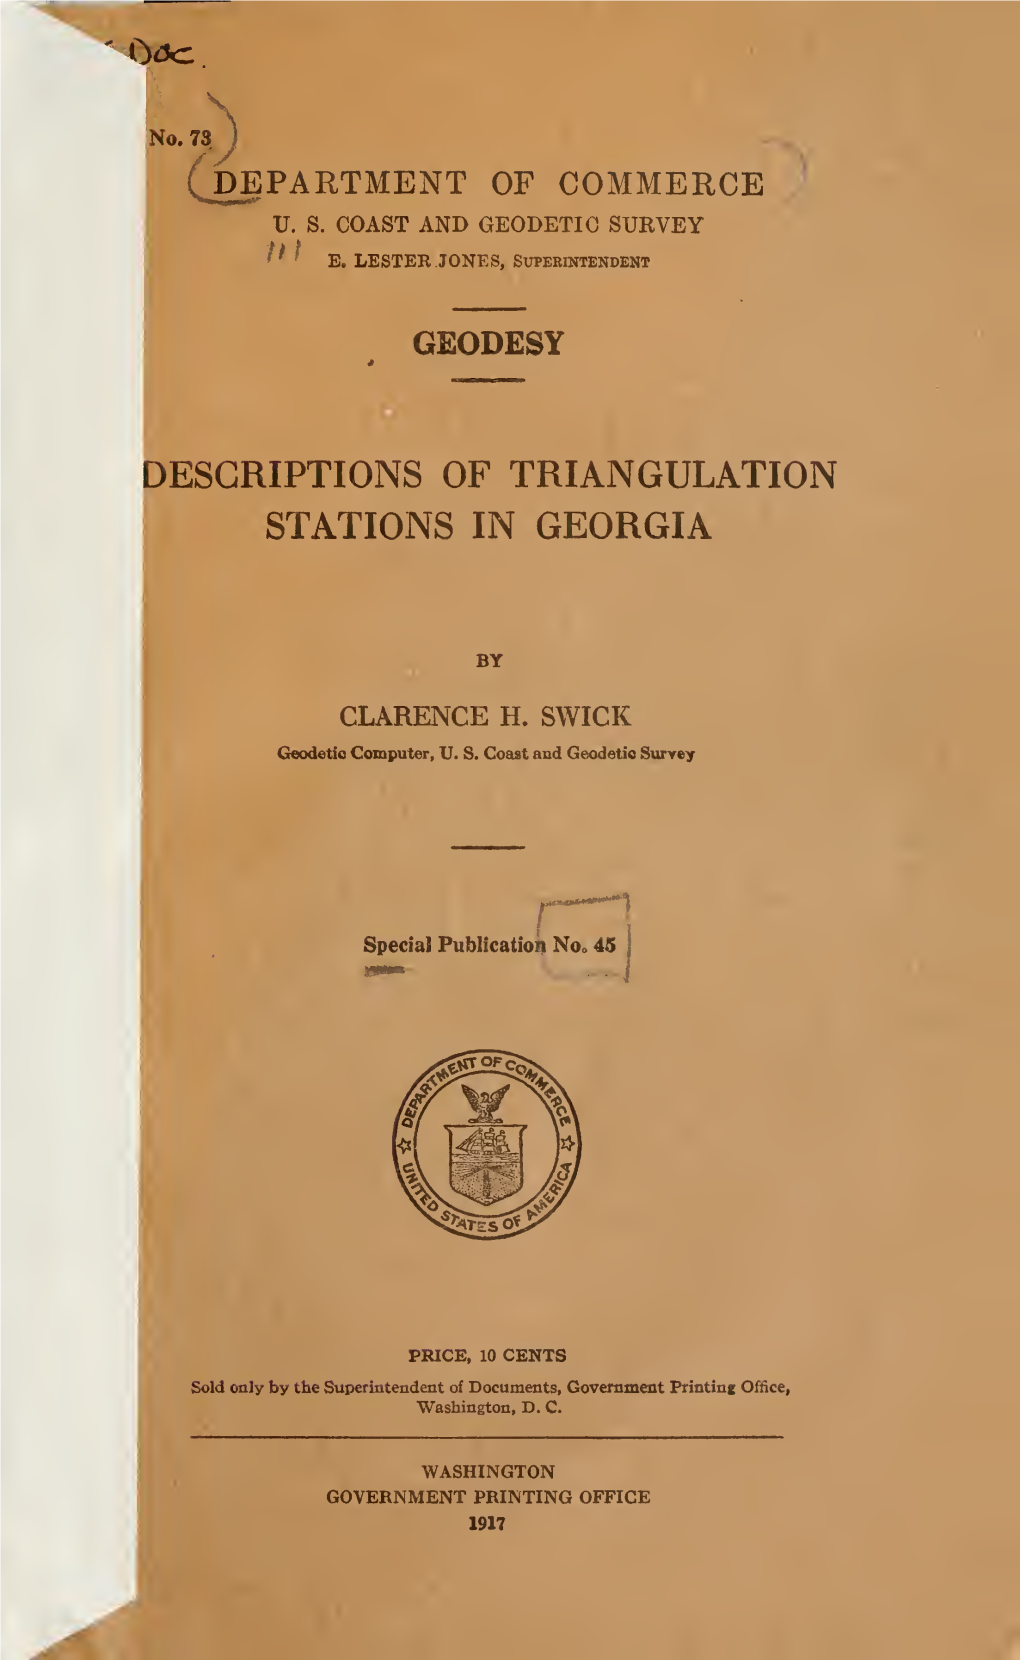 Descriptions of Triangulation Stations in Georgia